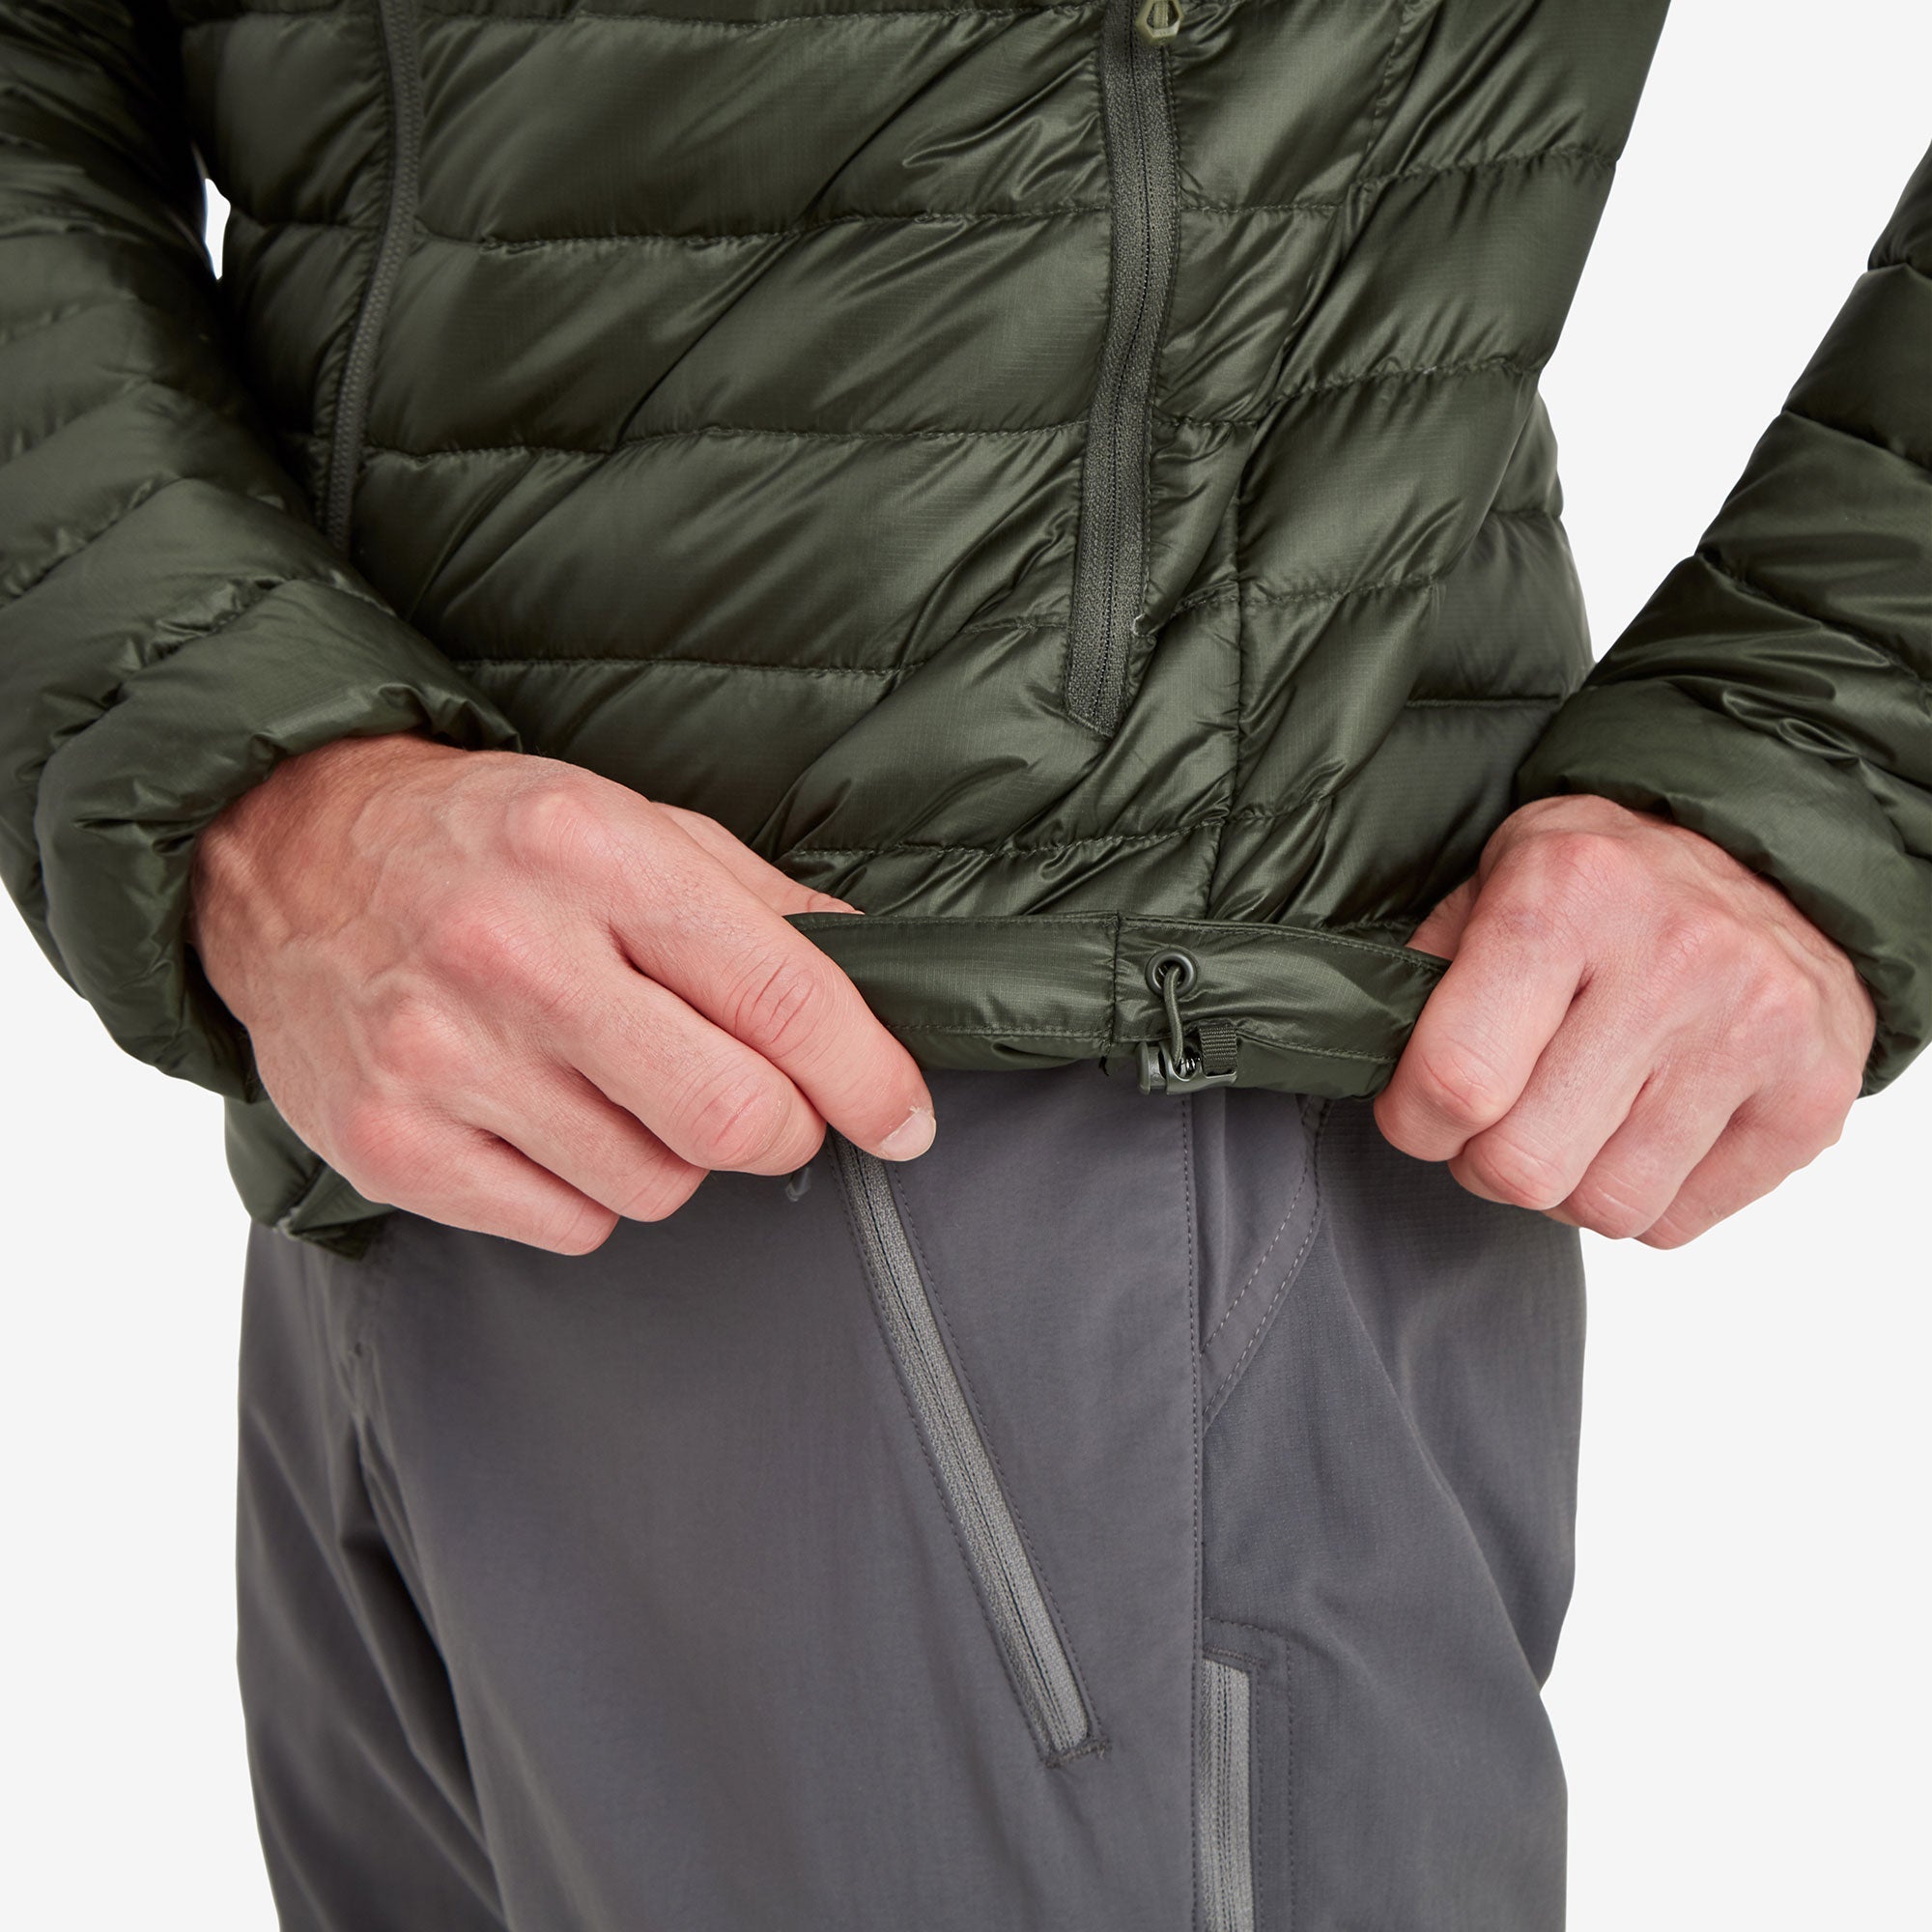 Montane Men's Anti-Freeze Hooded Down Jacket